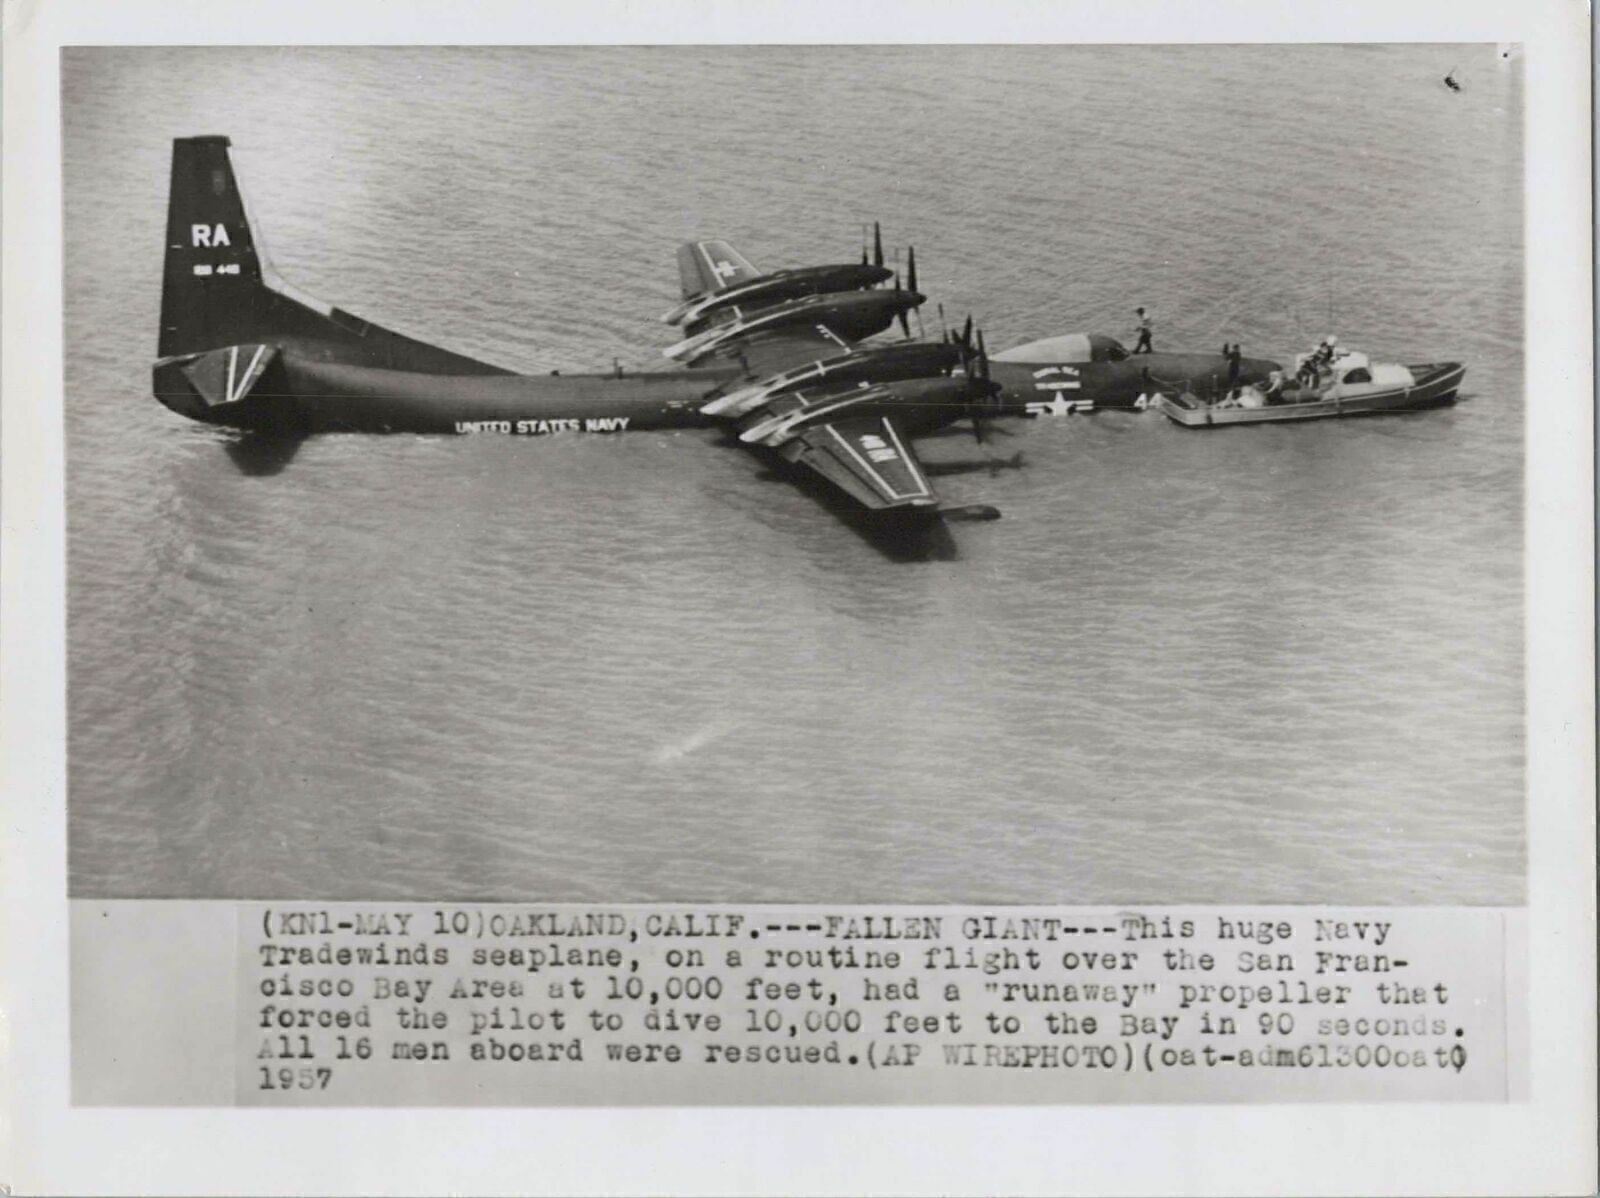 CONVAIR R3Y-1 FLYING BOAT US NAVY DITCHING SAN FRANCISCO BAY 1957 PRESS PHOTO